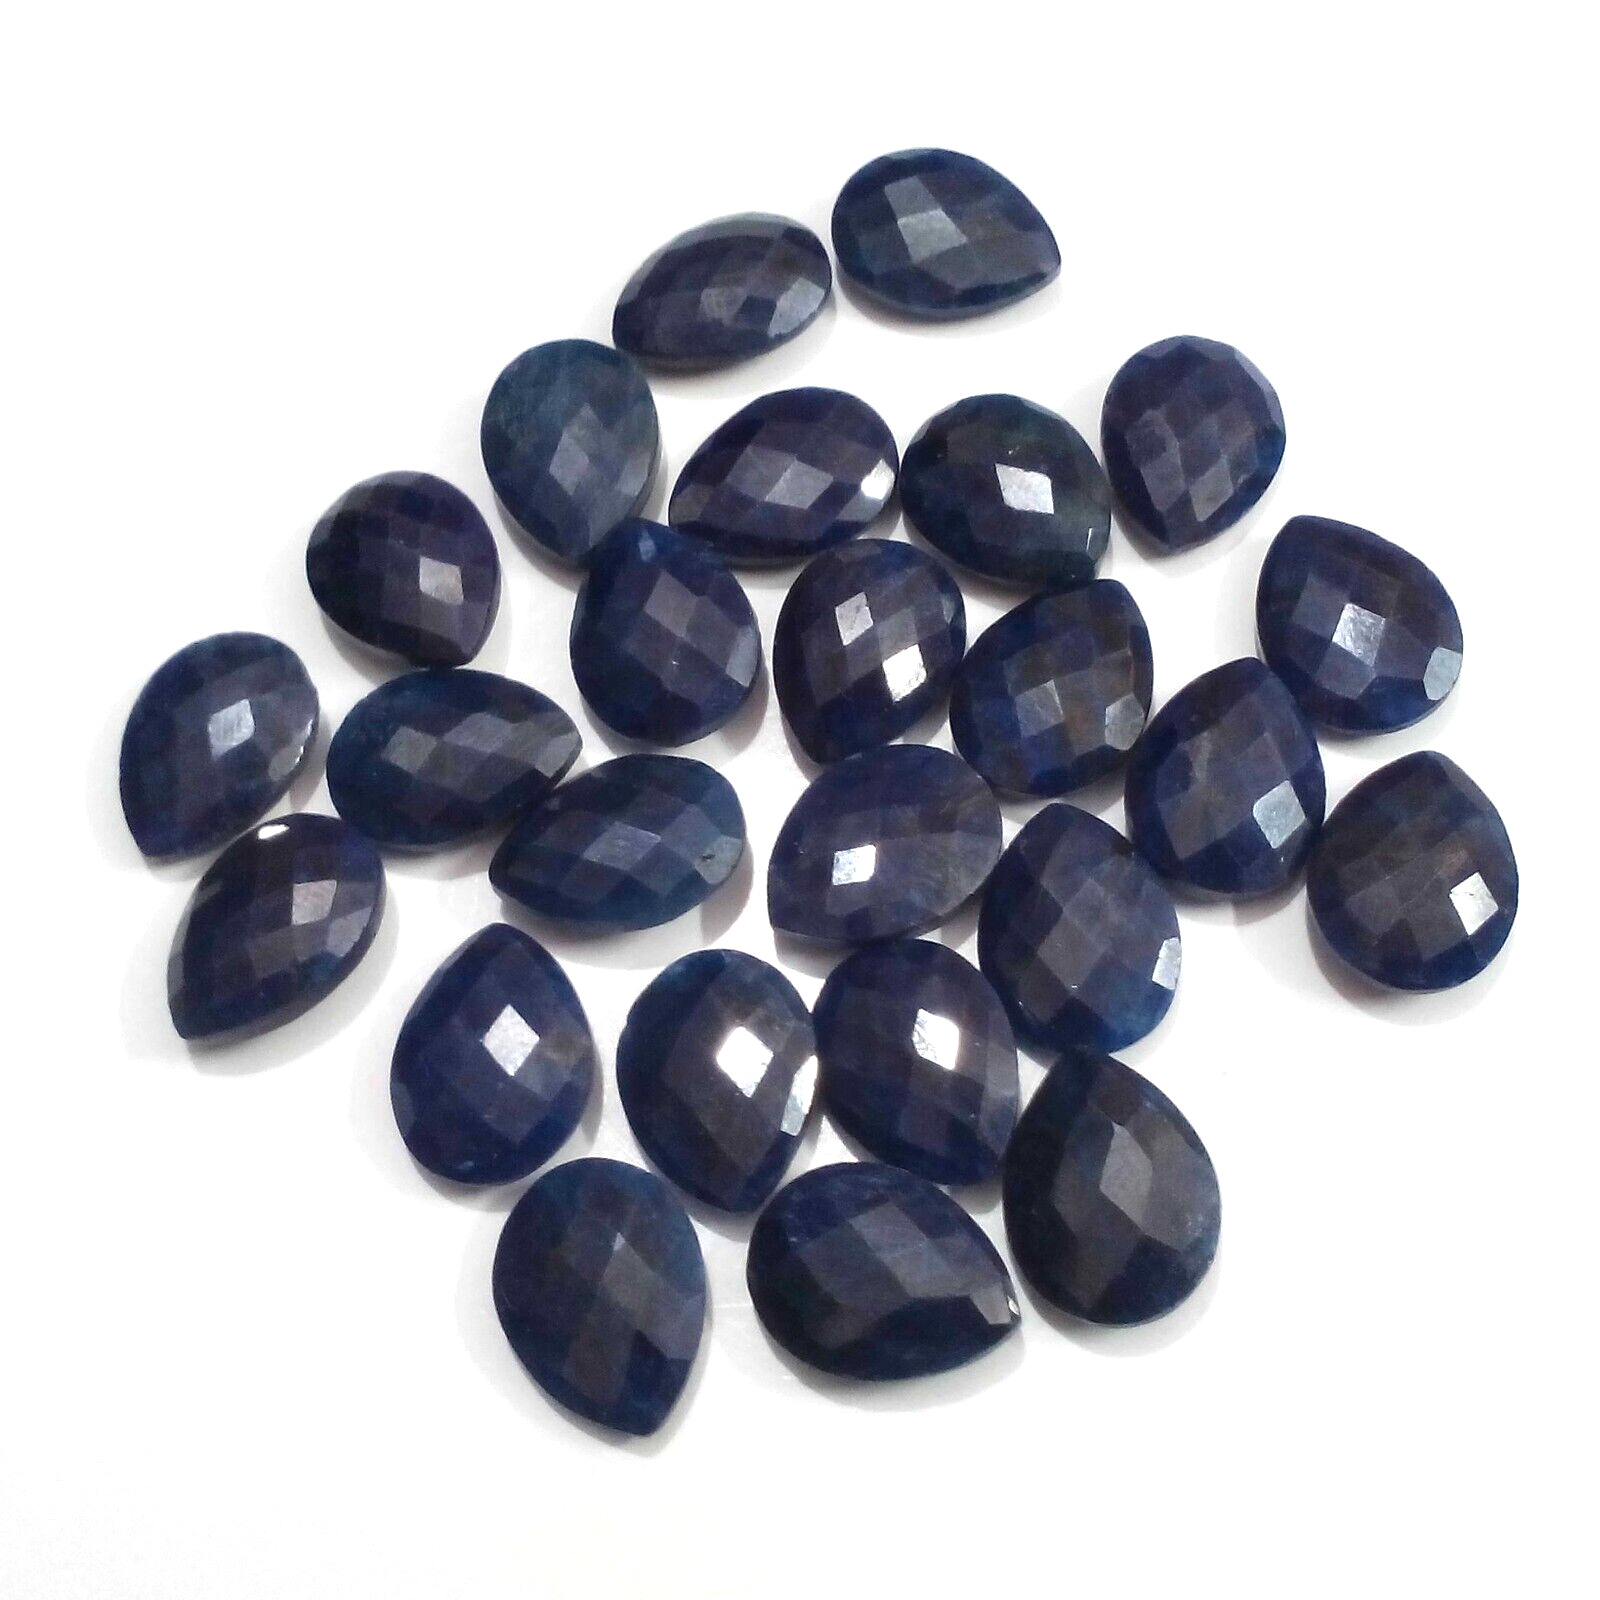 Natural Blue Sapphire Chekkar Cut Pear Shape 25 Piece Lot Loose Gemstone